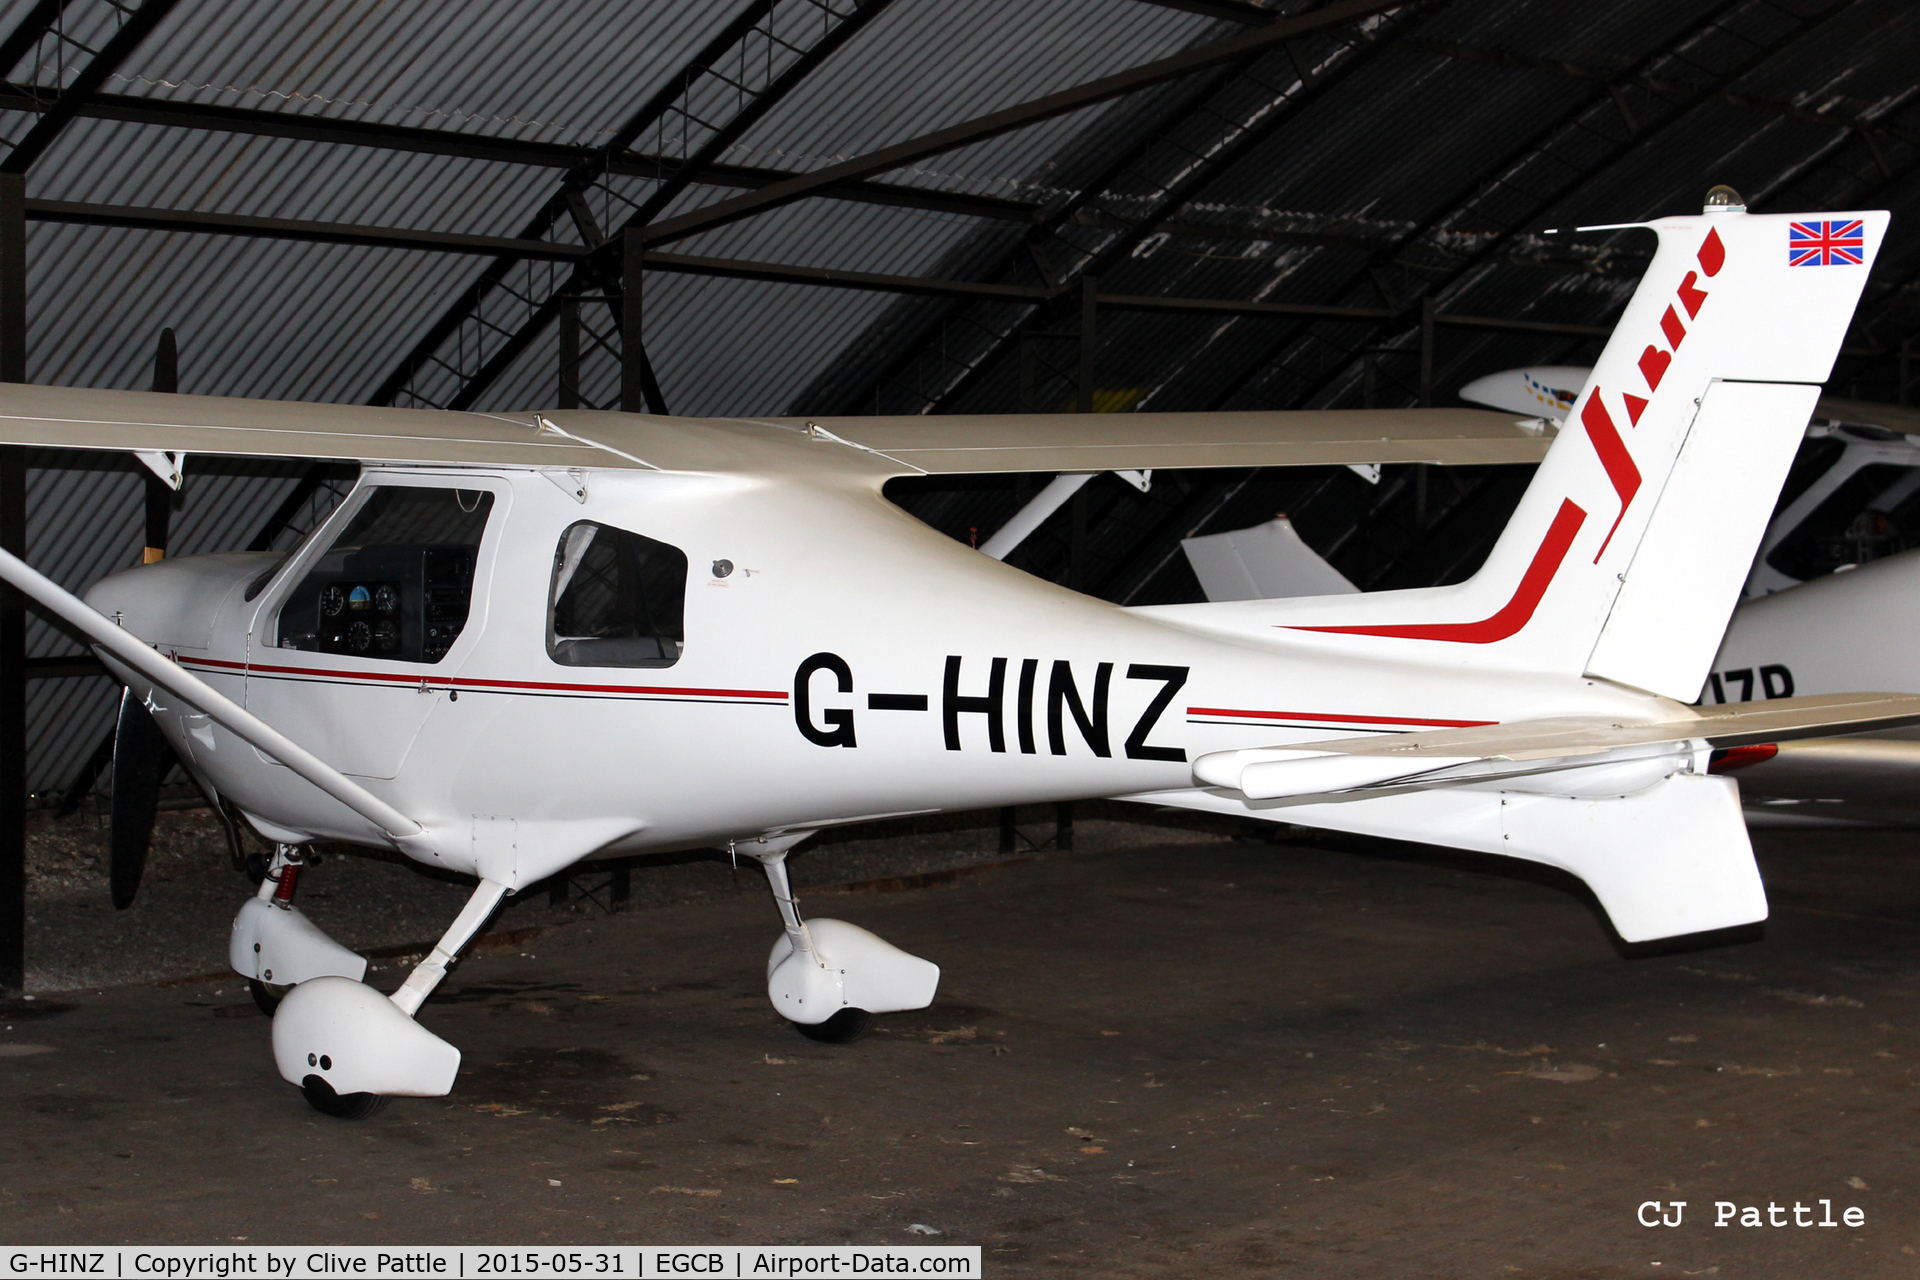 G-HINZ, 2000 Jabiru SK C/N PFA 274-13441, Hangared at Barton Airfield, Manchester - EGCB